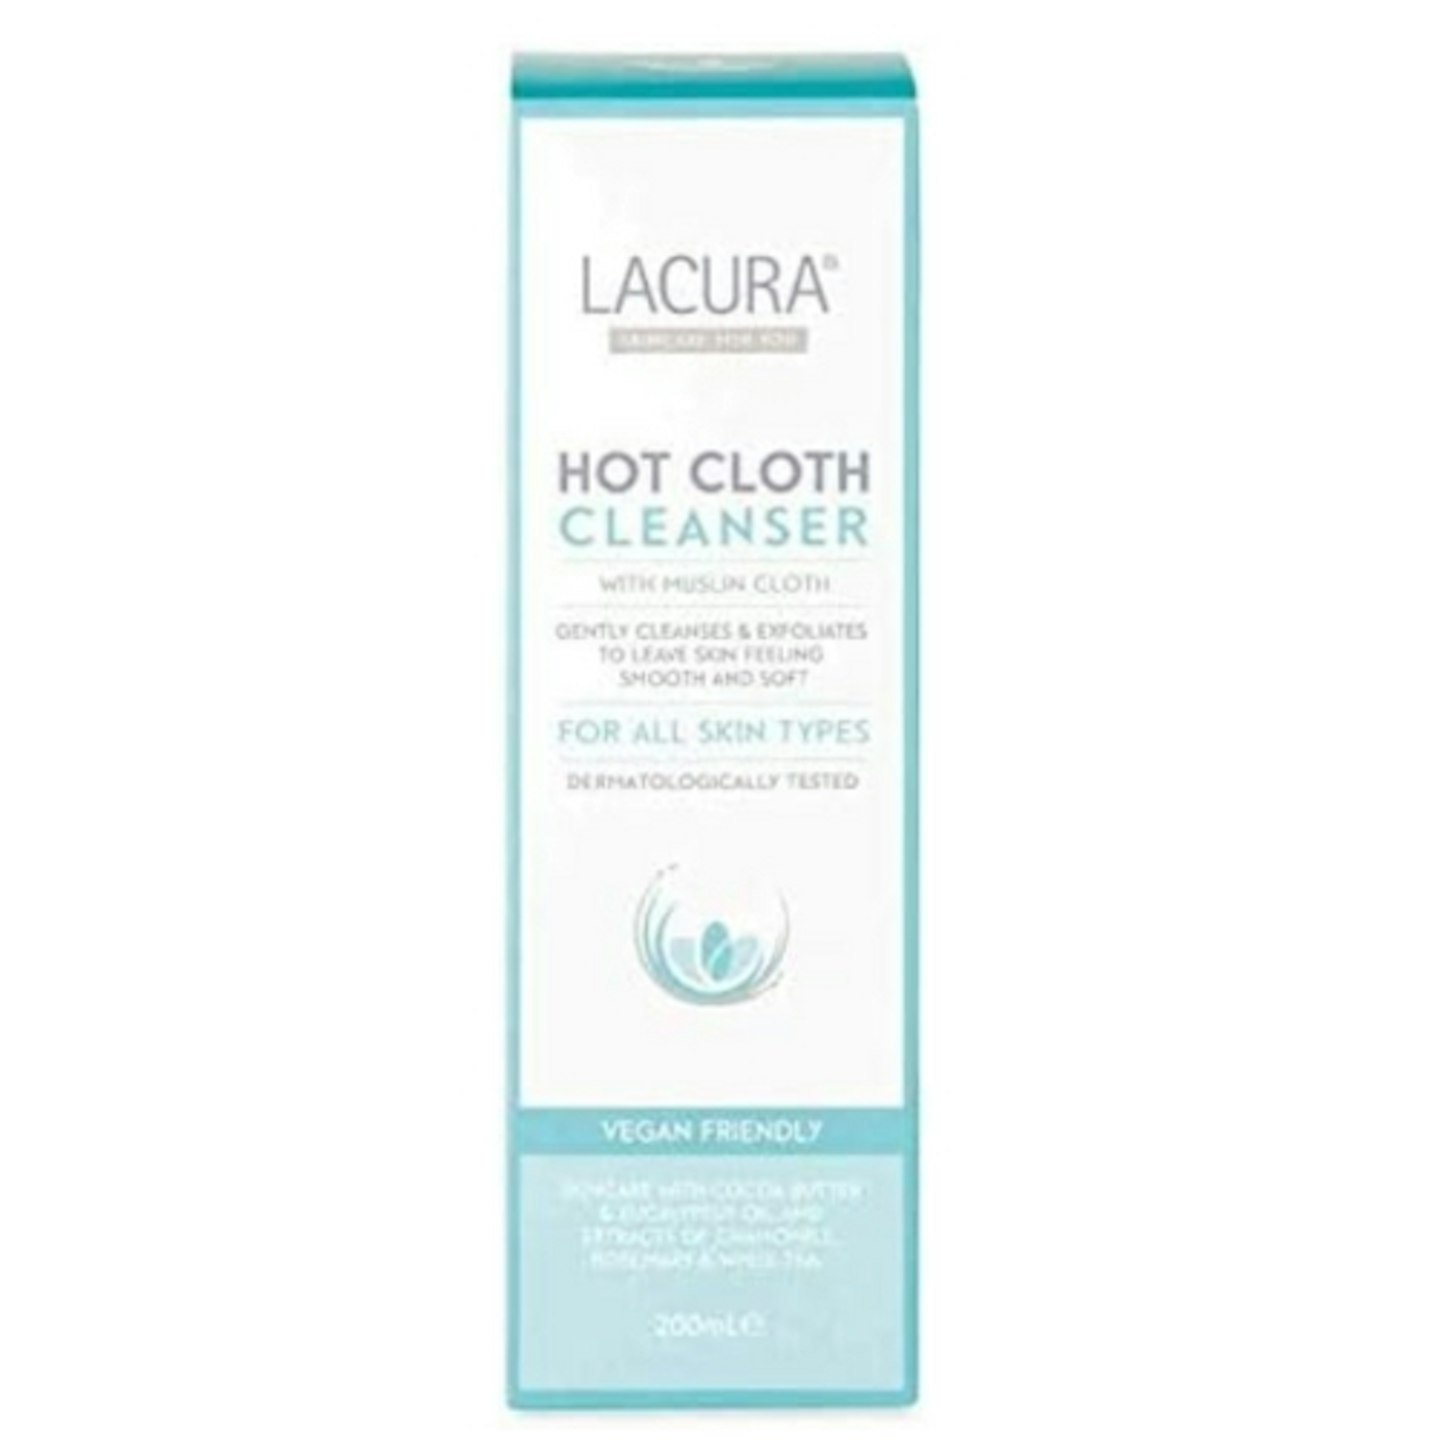 Lacura Hot Cloth Cleanser 200ml